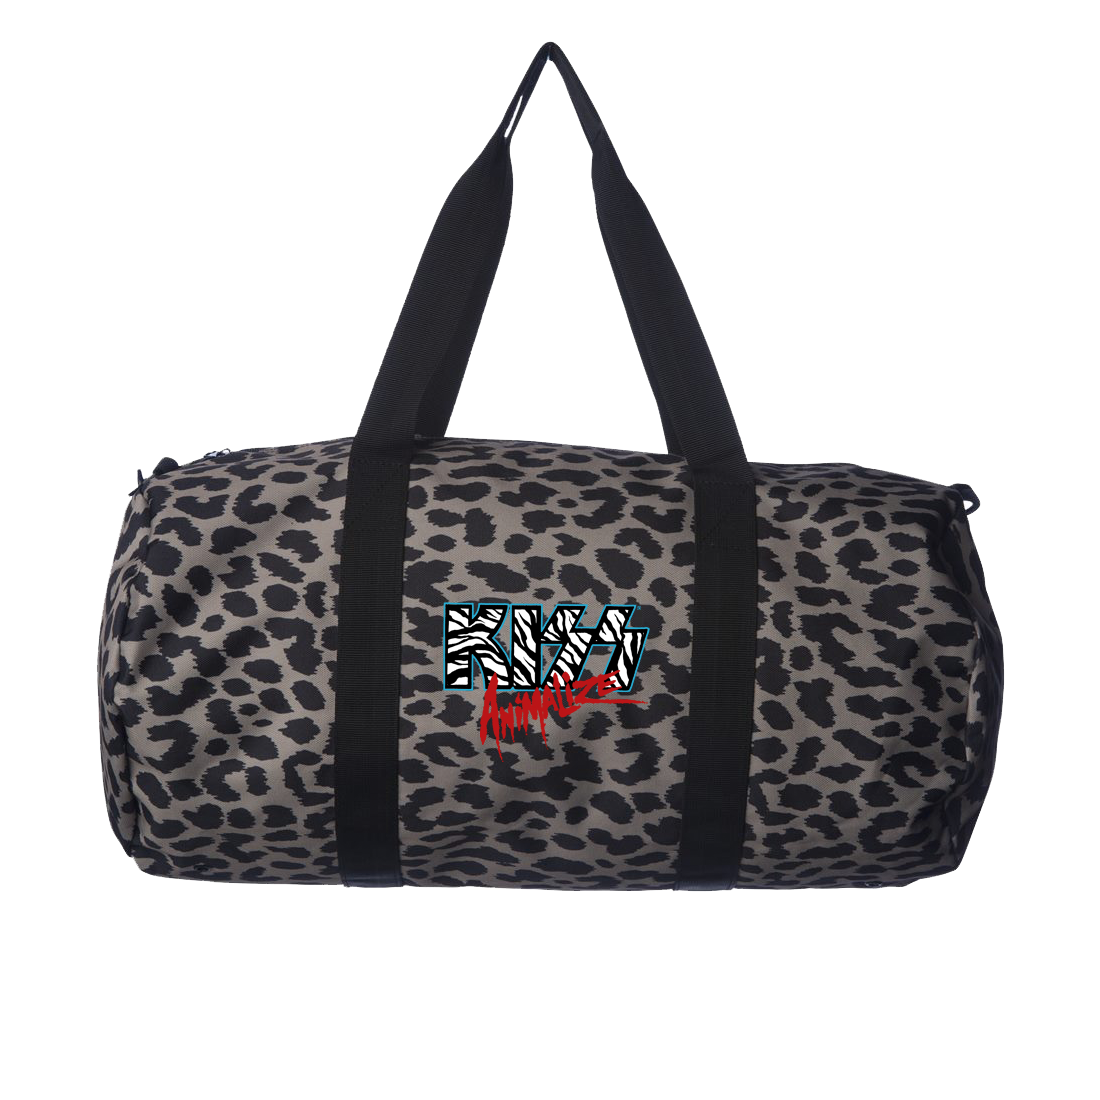 Kiss - Animalize Duffle Bag